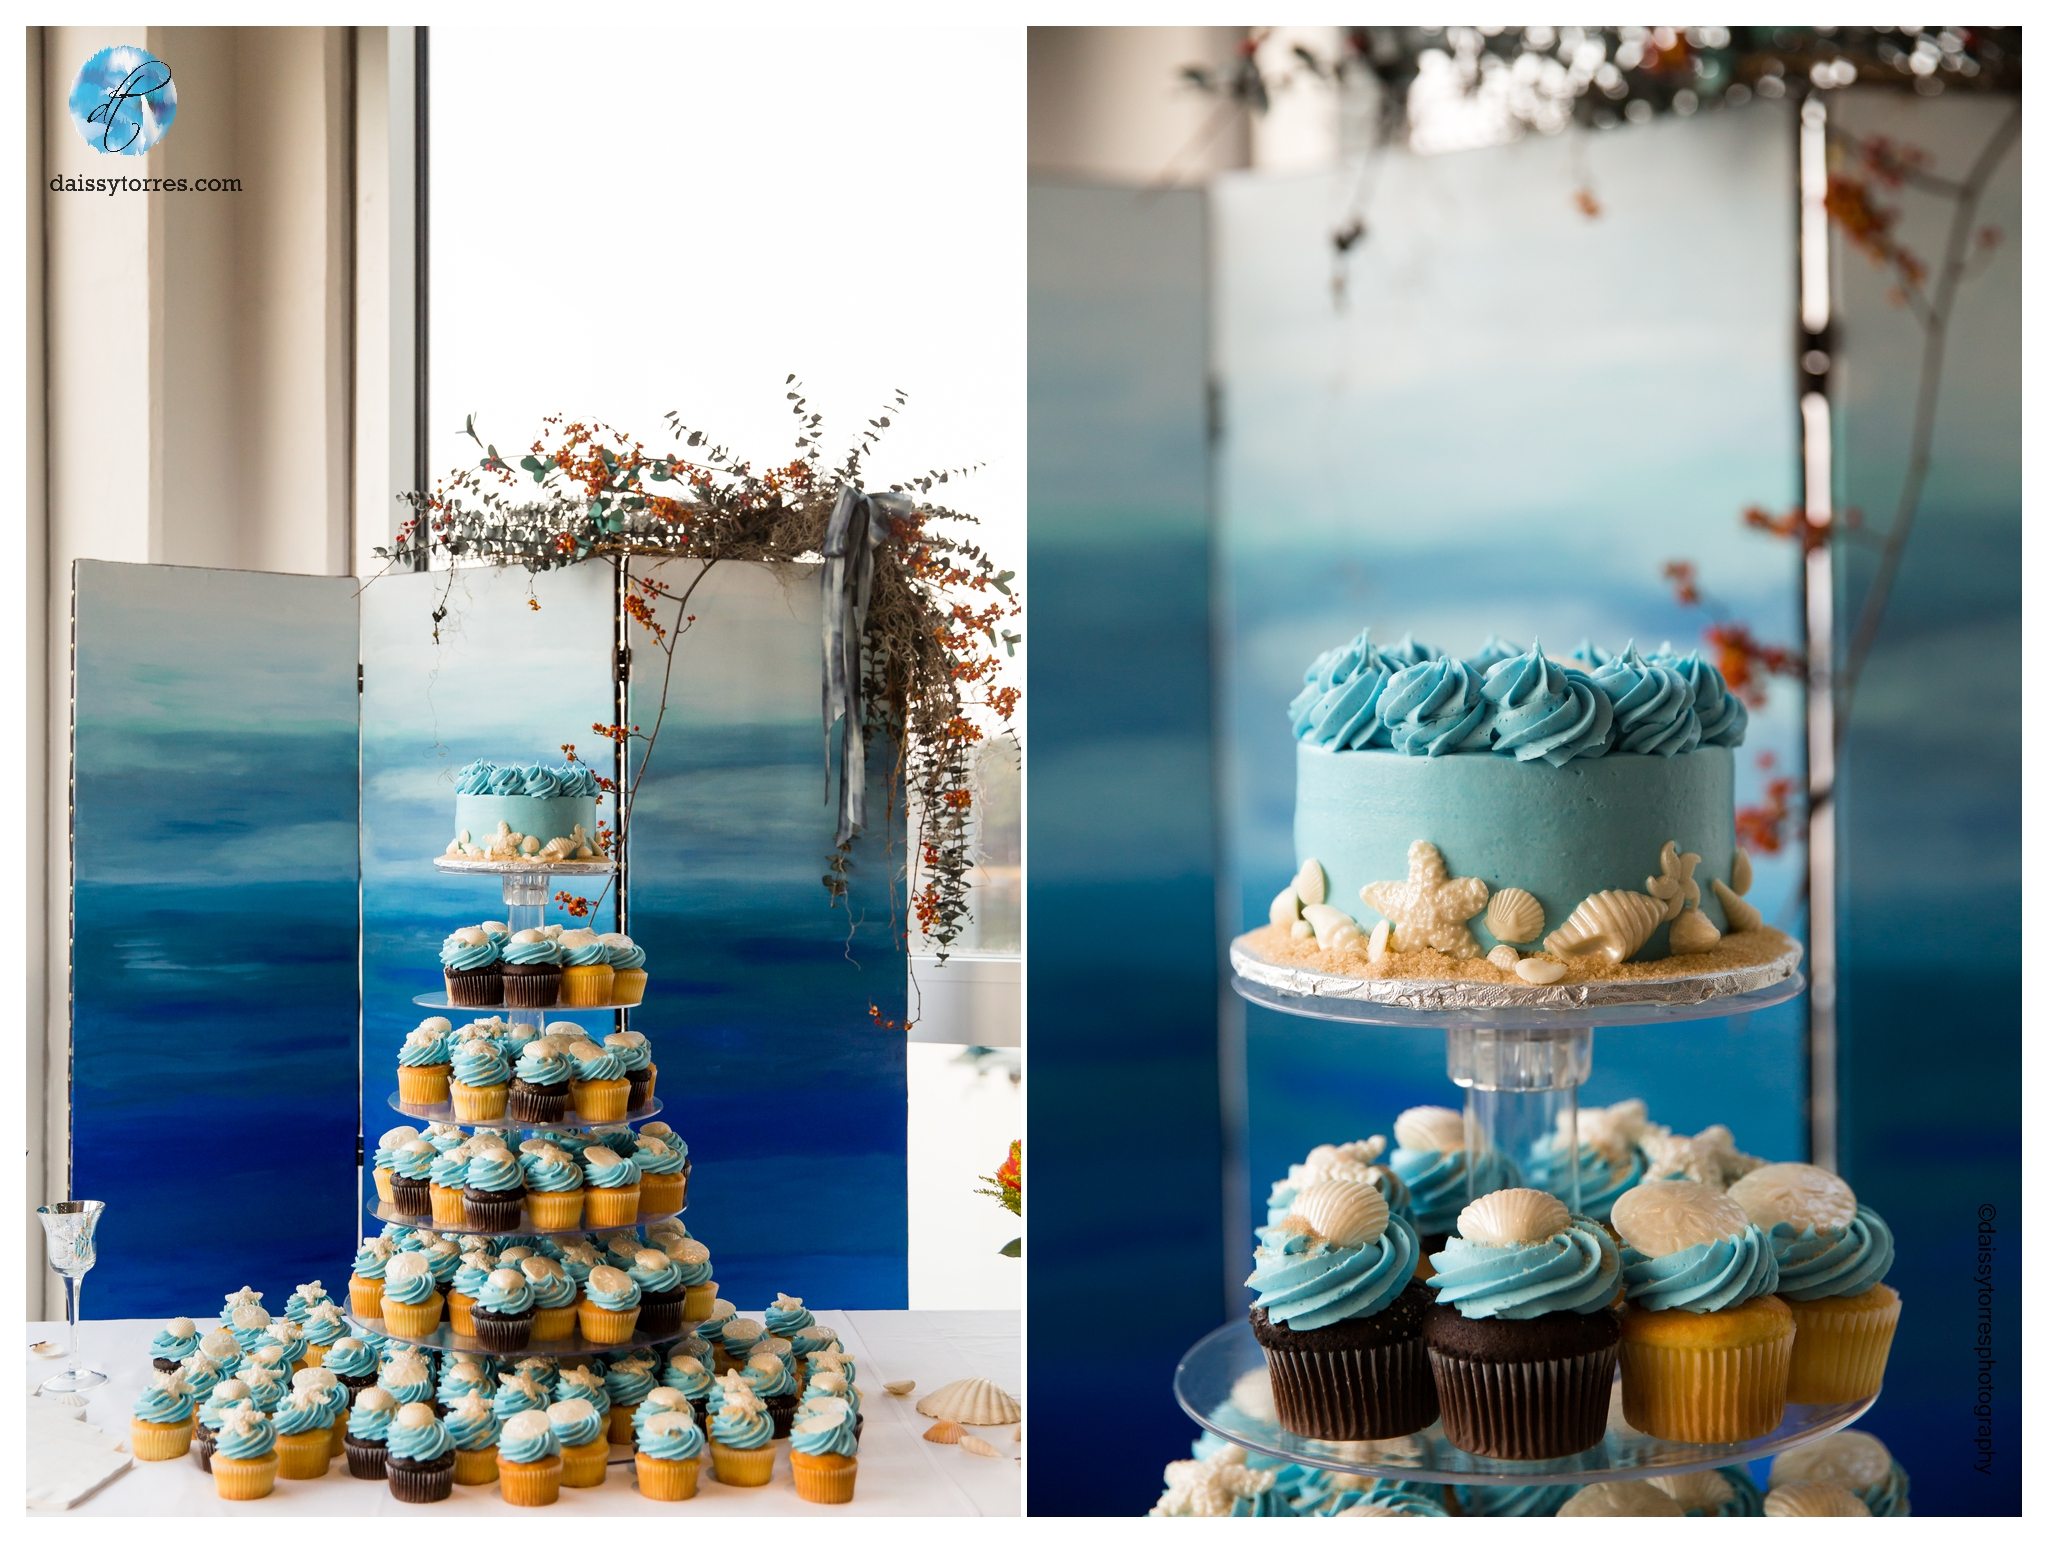 Virginia Aquarium Wedding - Cake and Cupcakes by Sugar Plum Bakery